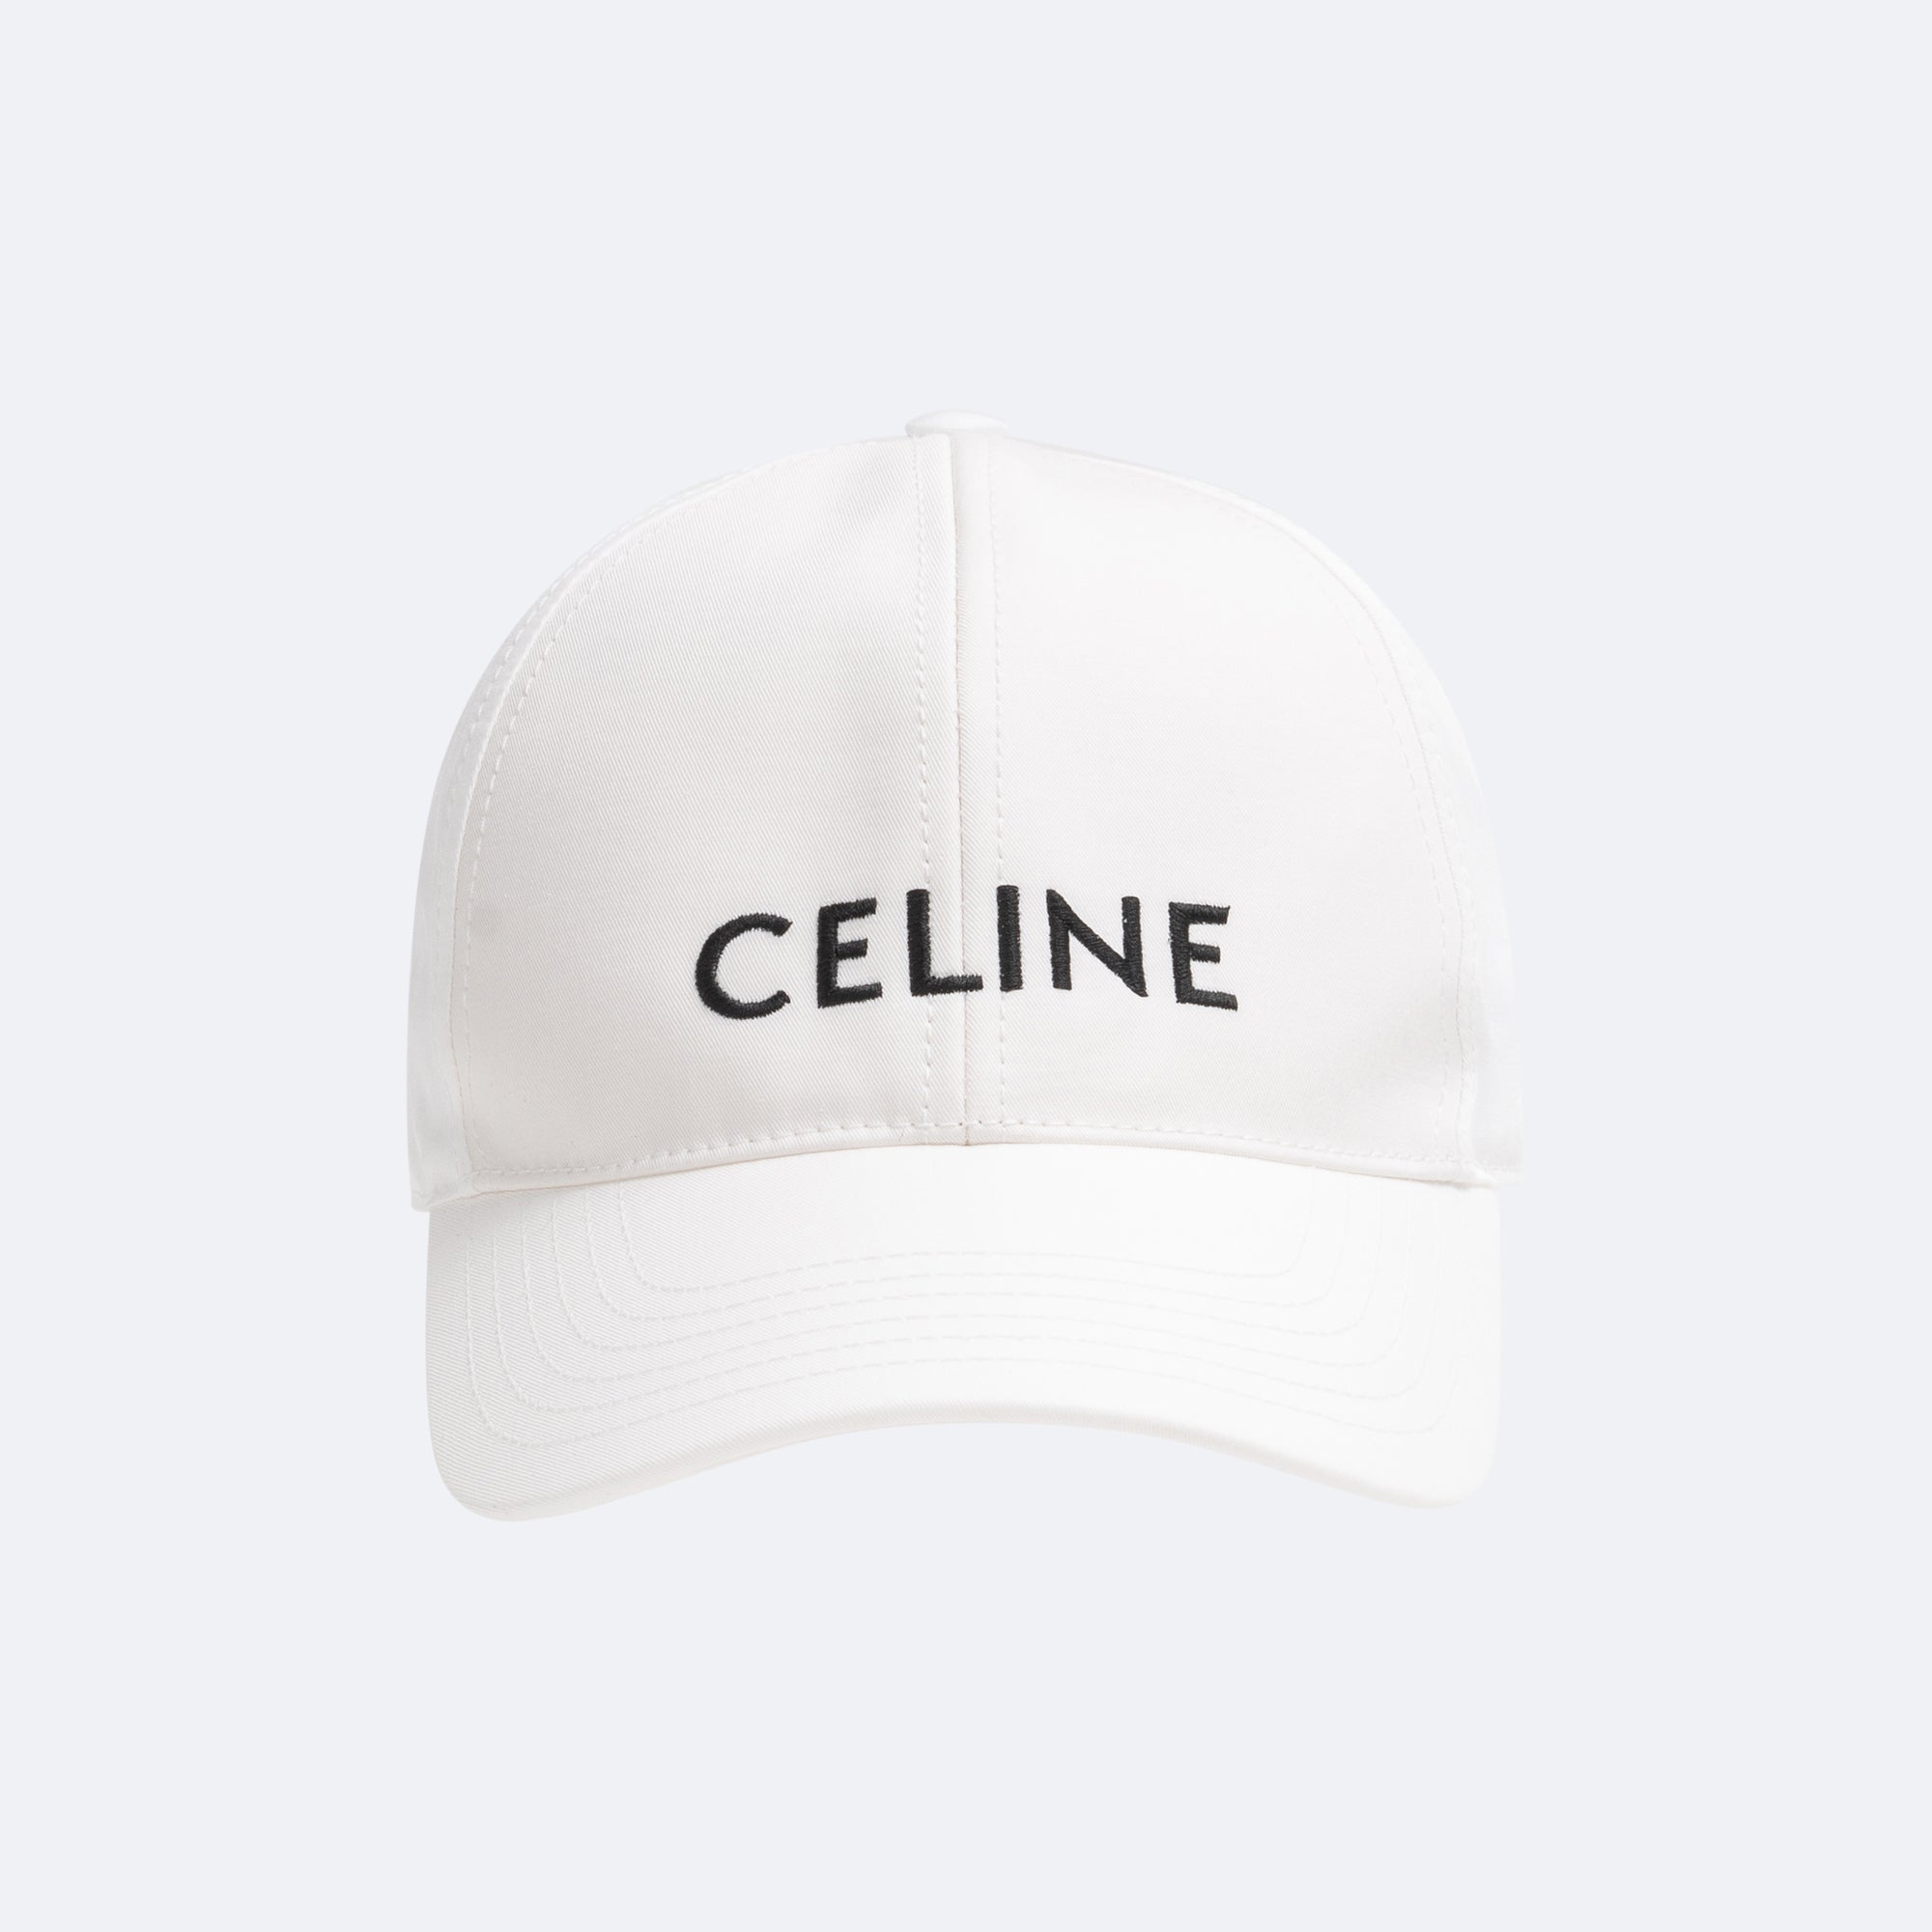 CELINE | Baseballkappe mit Logo